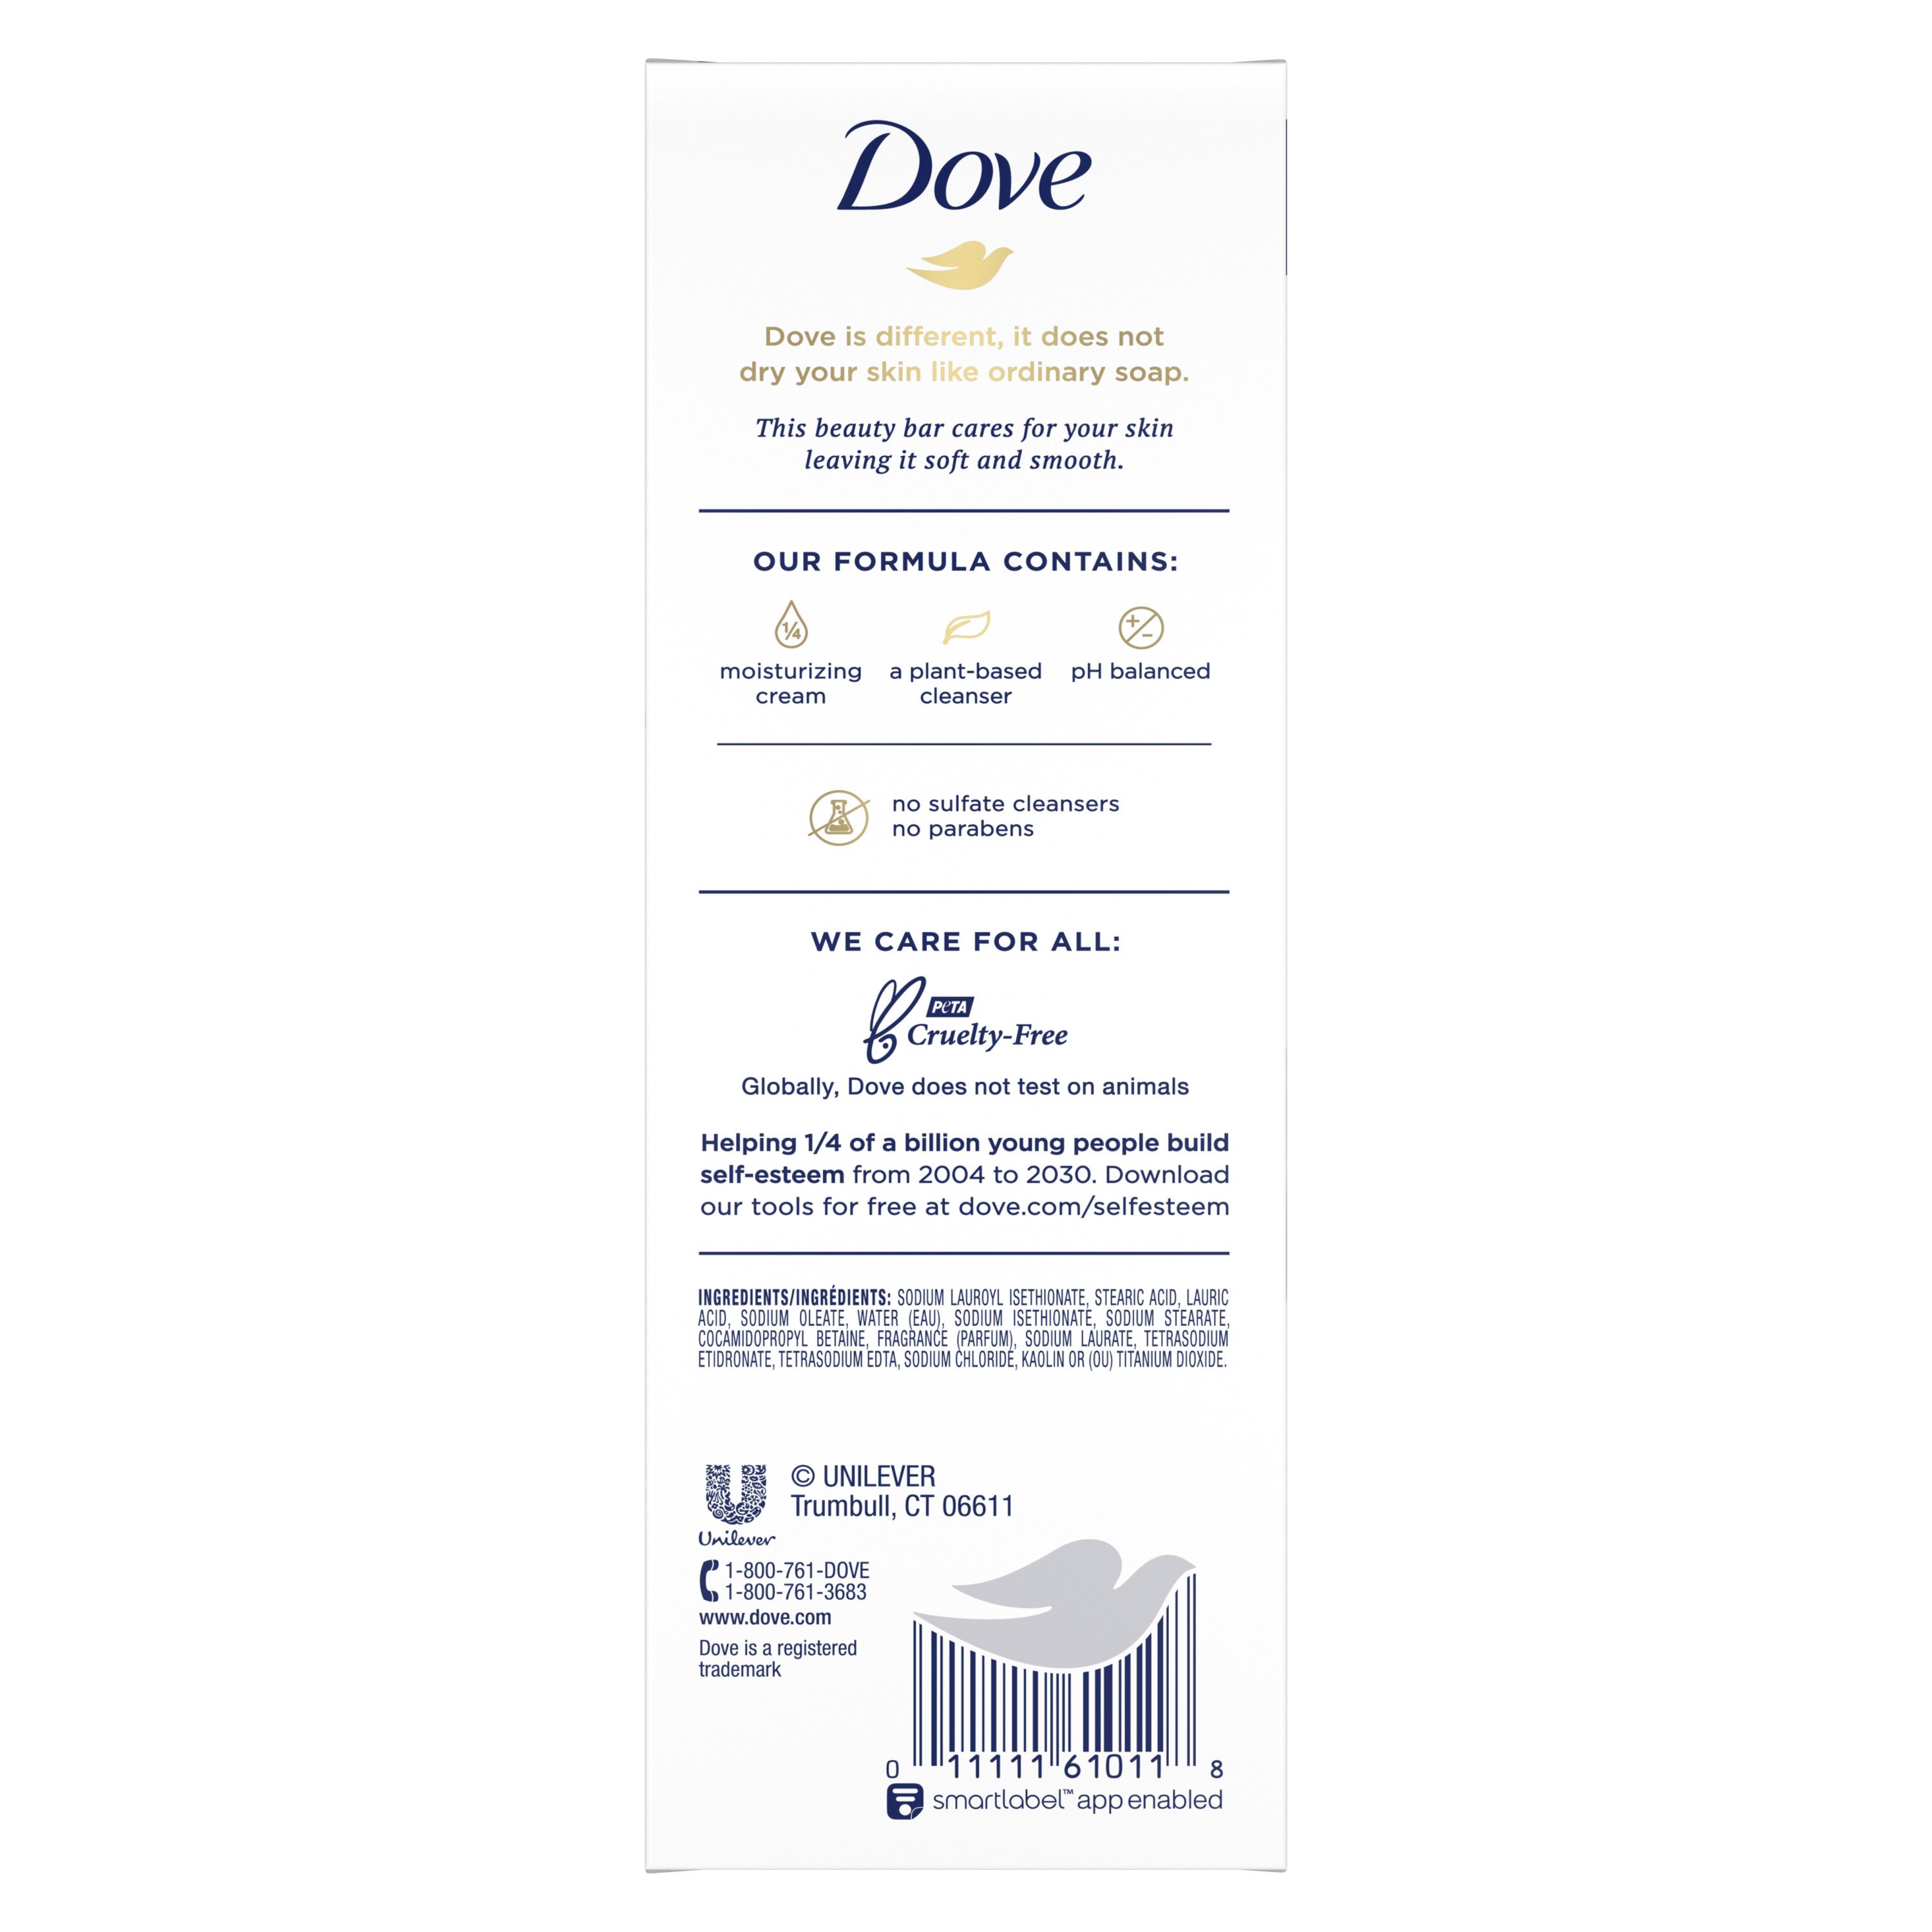 Dove Men+Care Soap Bar Skin Defense 6 Count - Shop Hand & Bar Soap at H-E-B